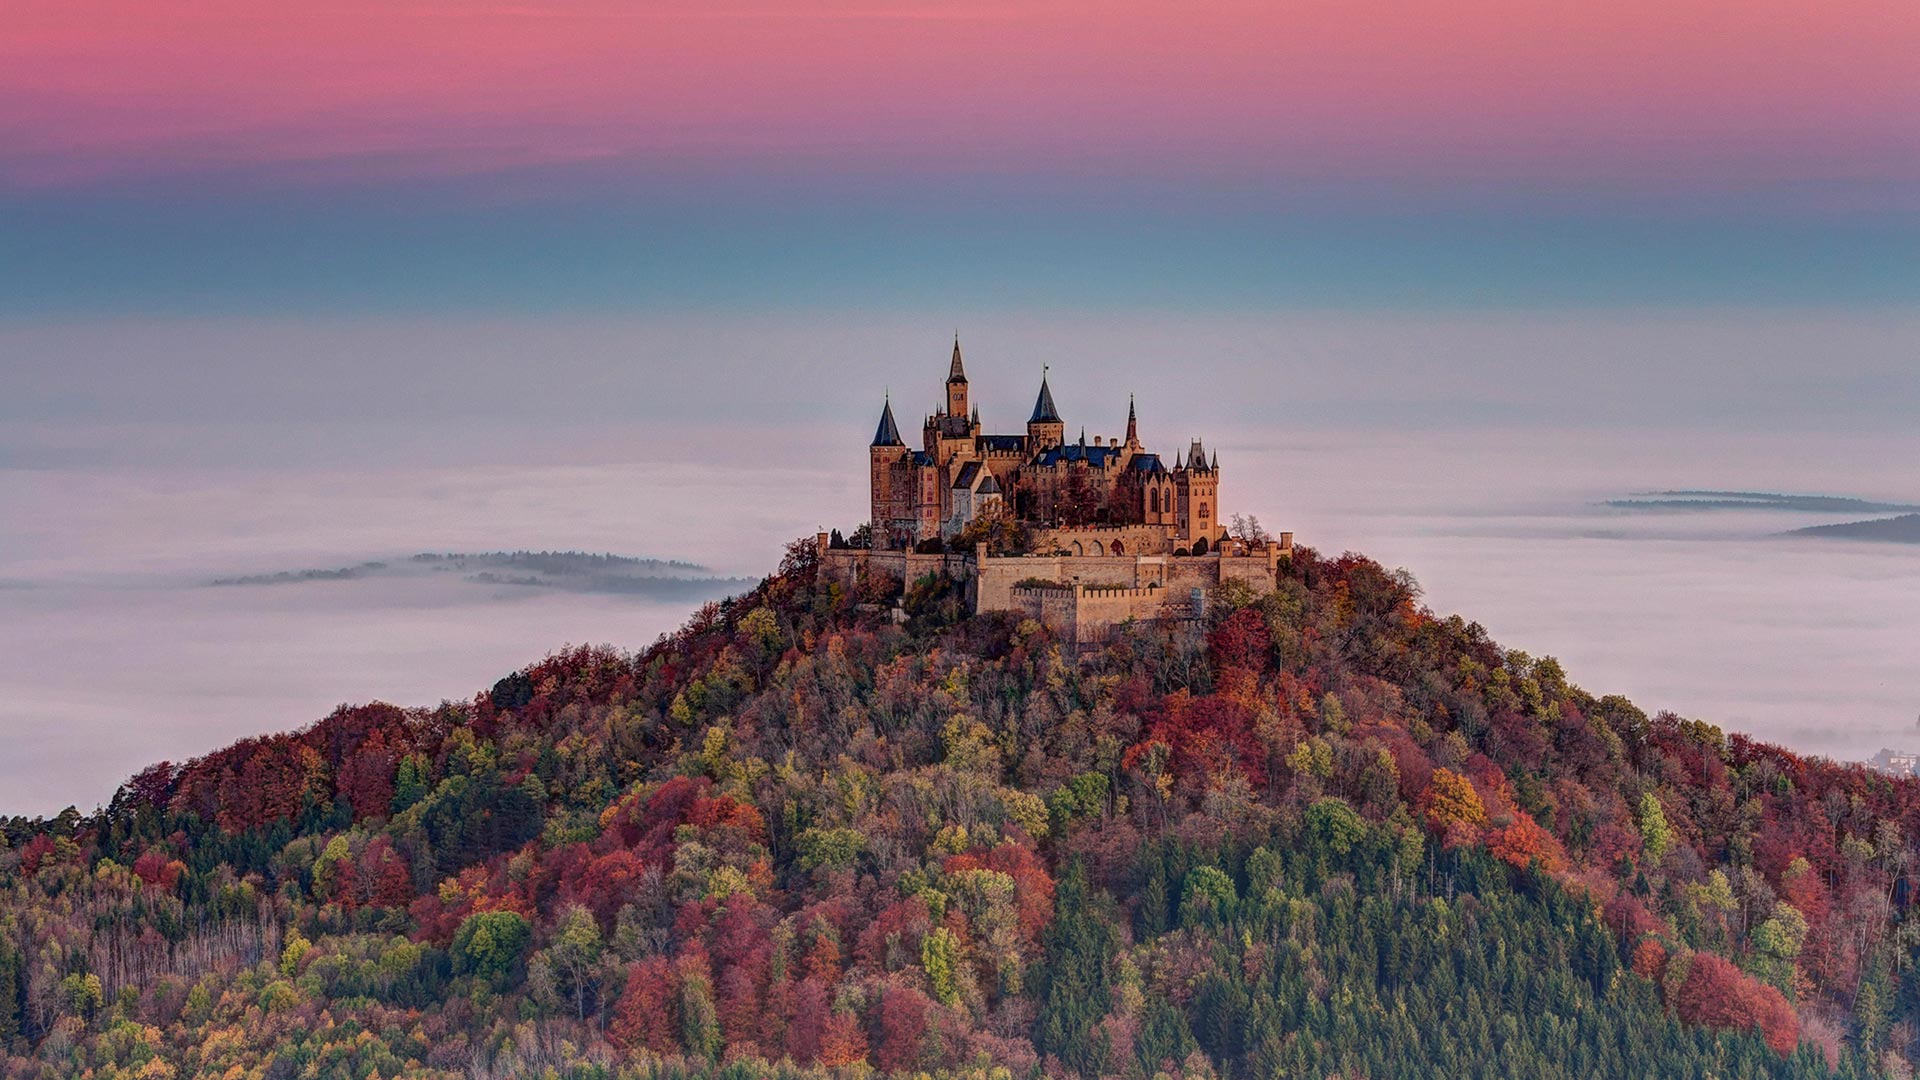 Hohenzollern Herbst